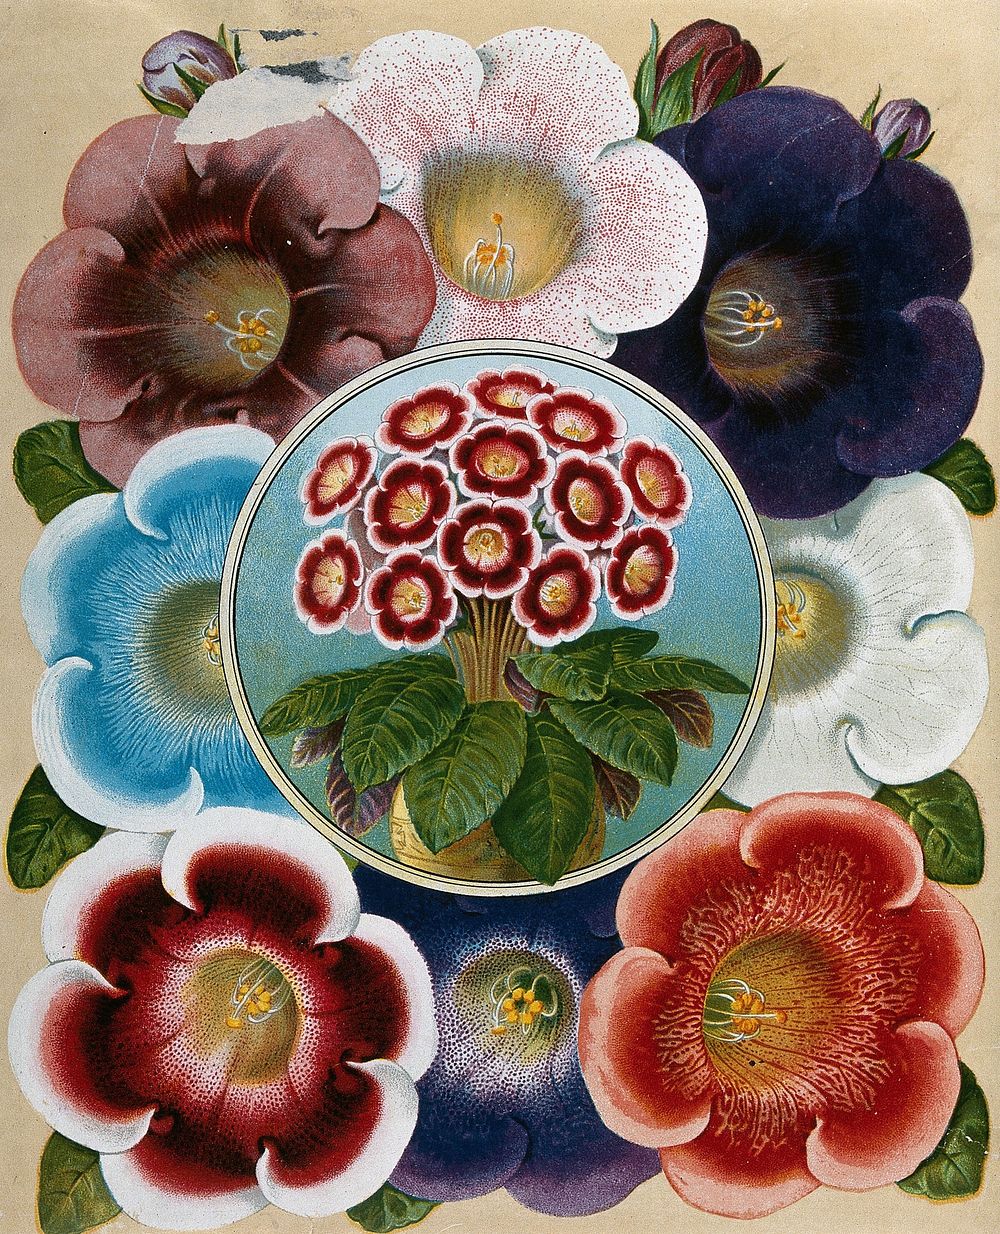 Mixed flowers, all cultivars of the florist's gloxinia (Sinningia speciosa). Chromolithograph, c. 1890.